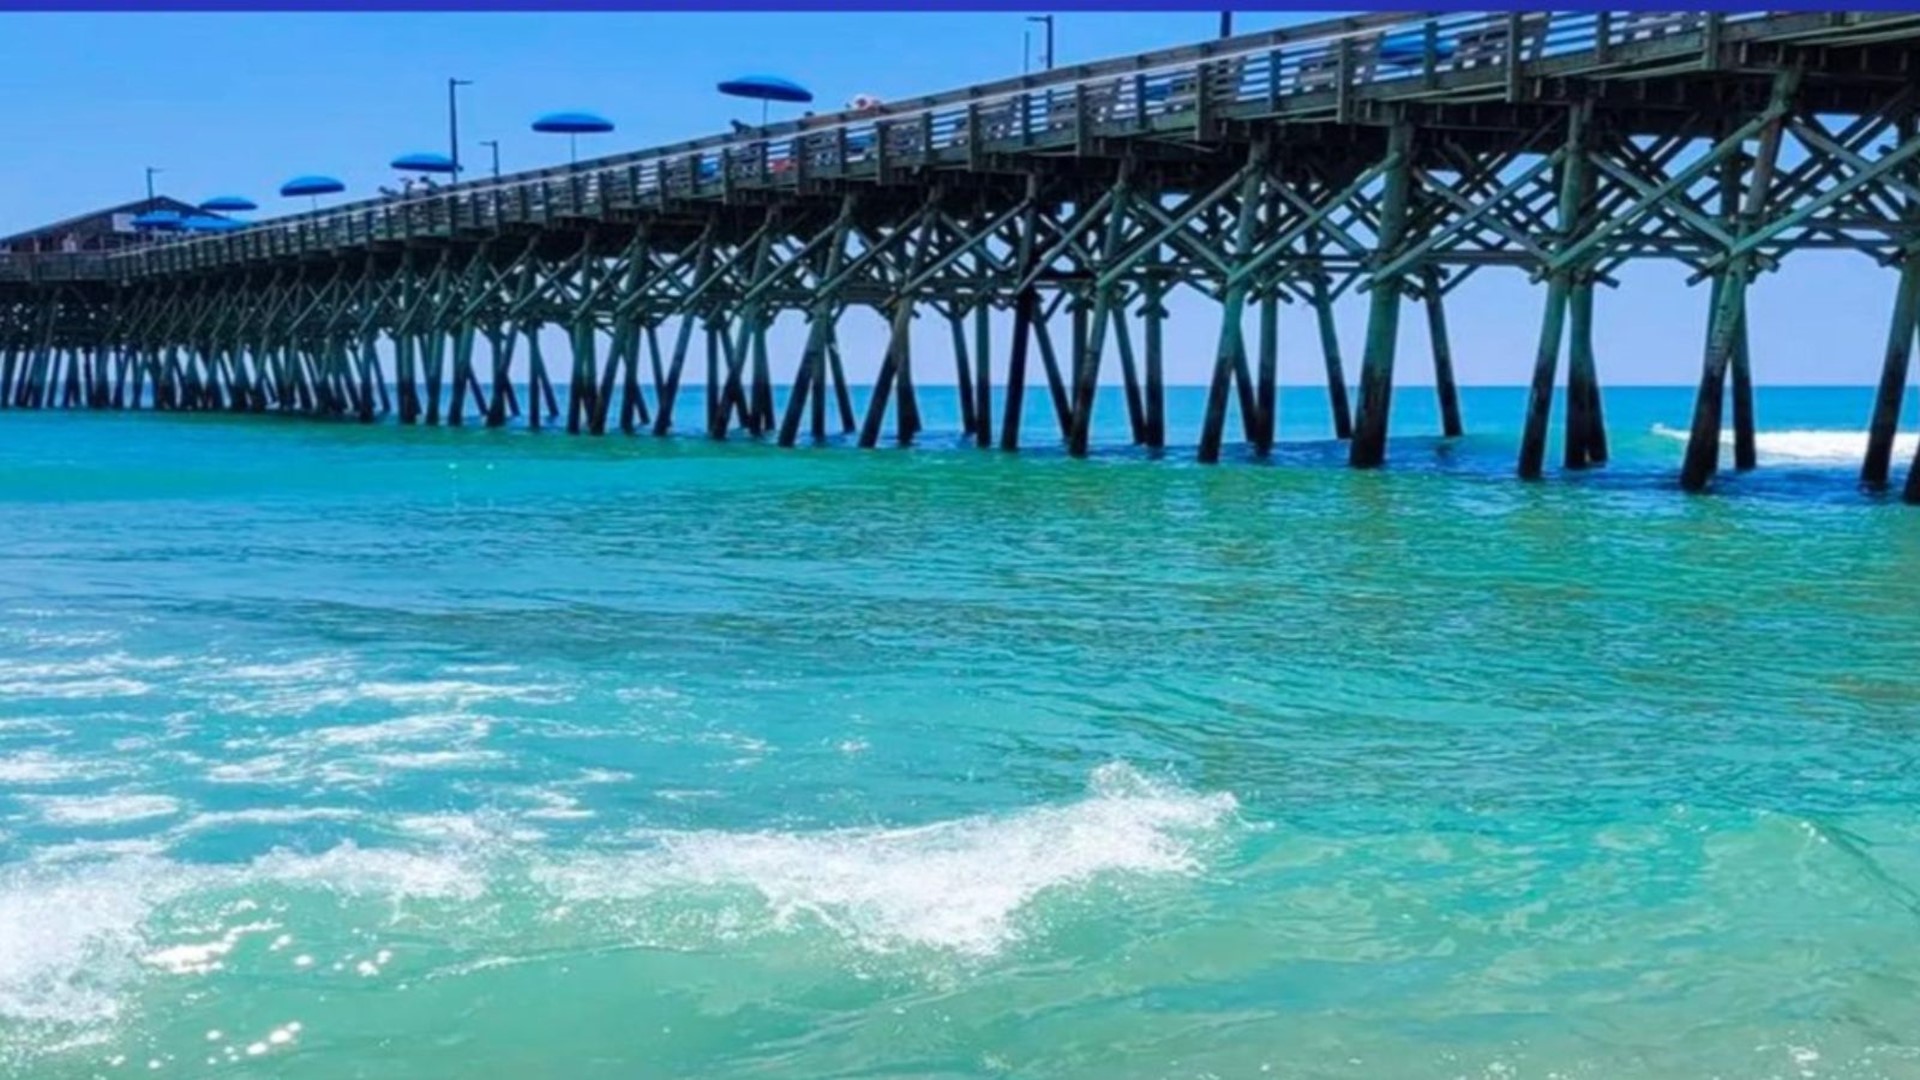 Caribbean or Myrtle Beach? 'Crazy' blue water causes stir online